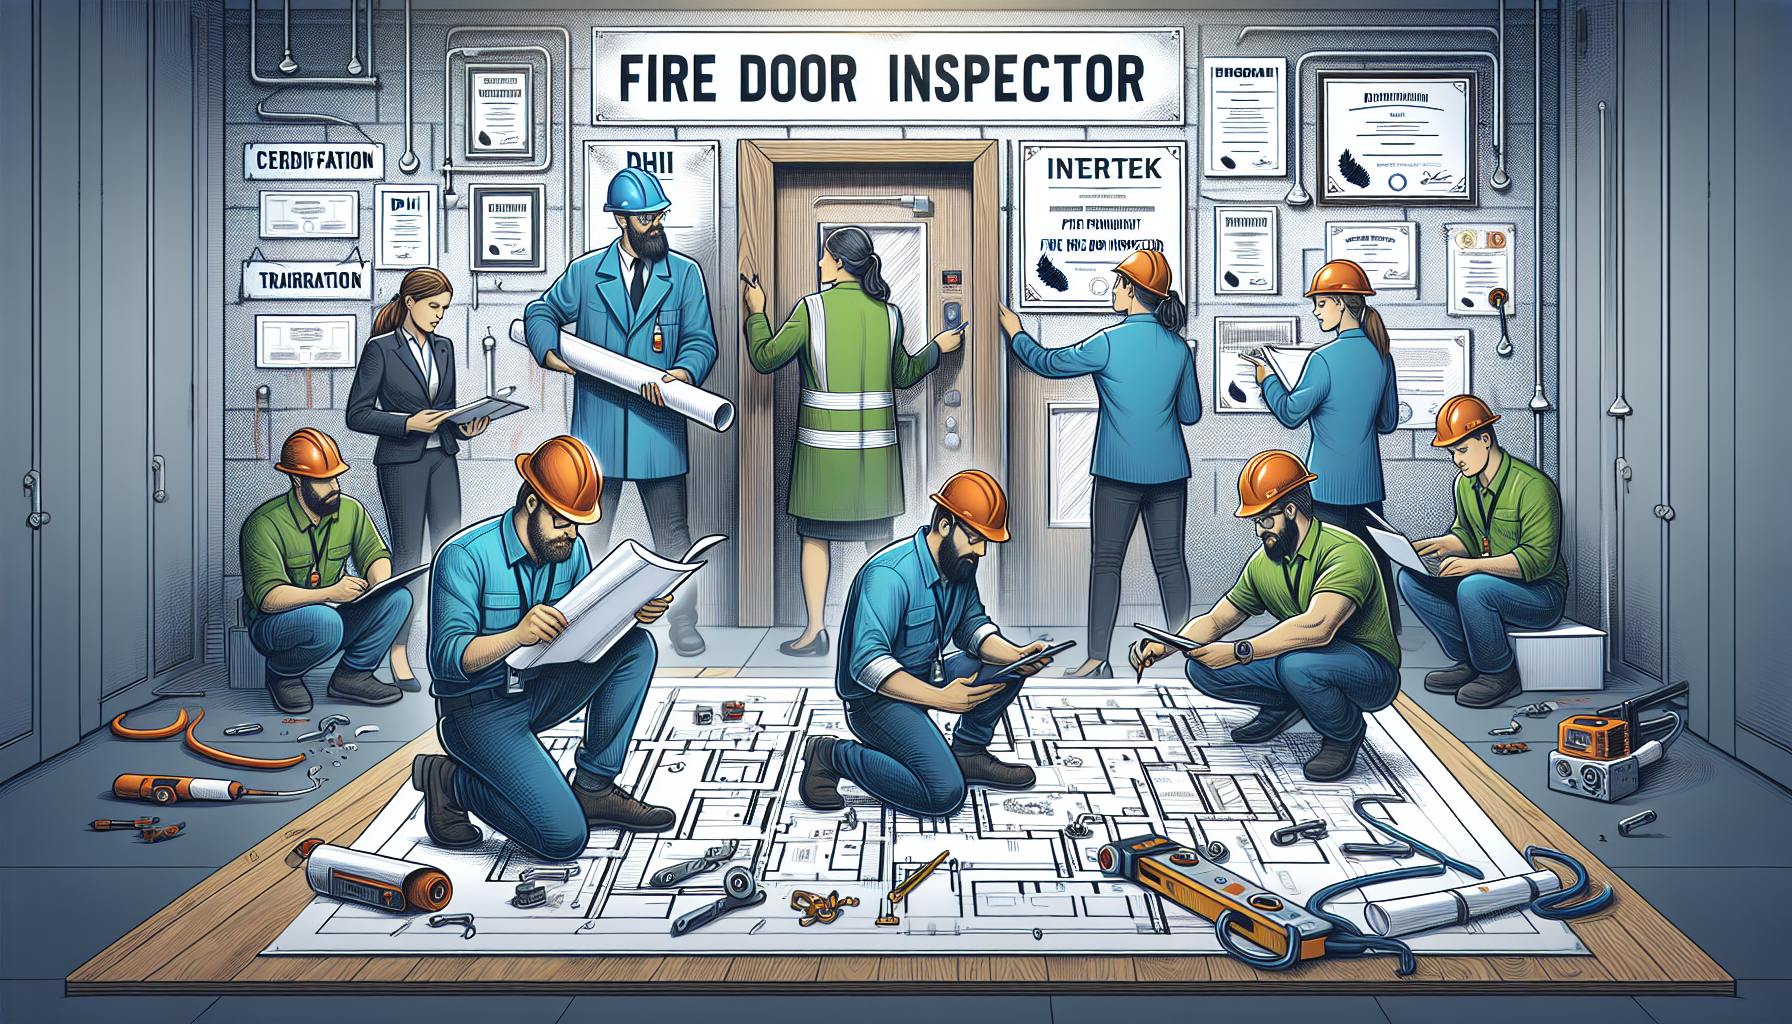 Illustration of professional fire door inspectors